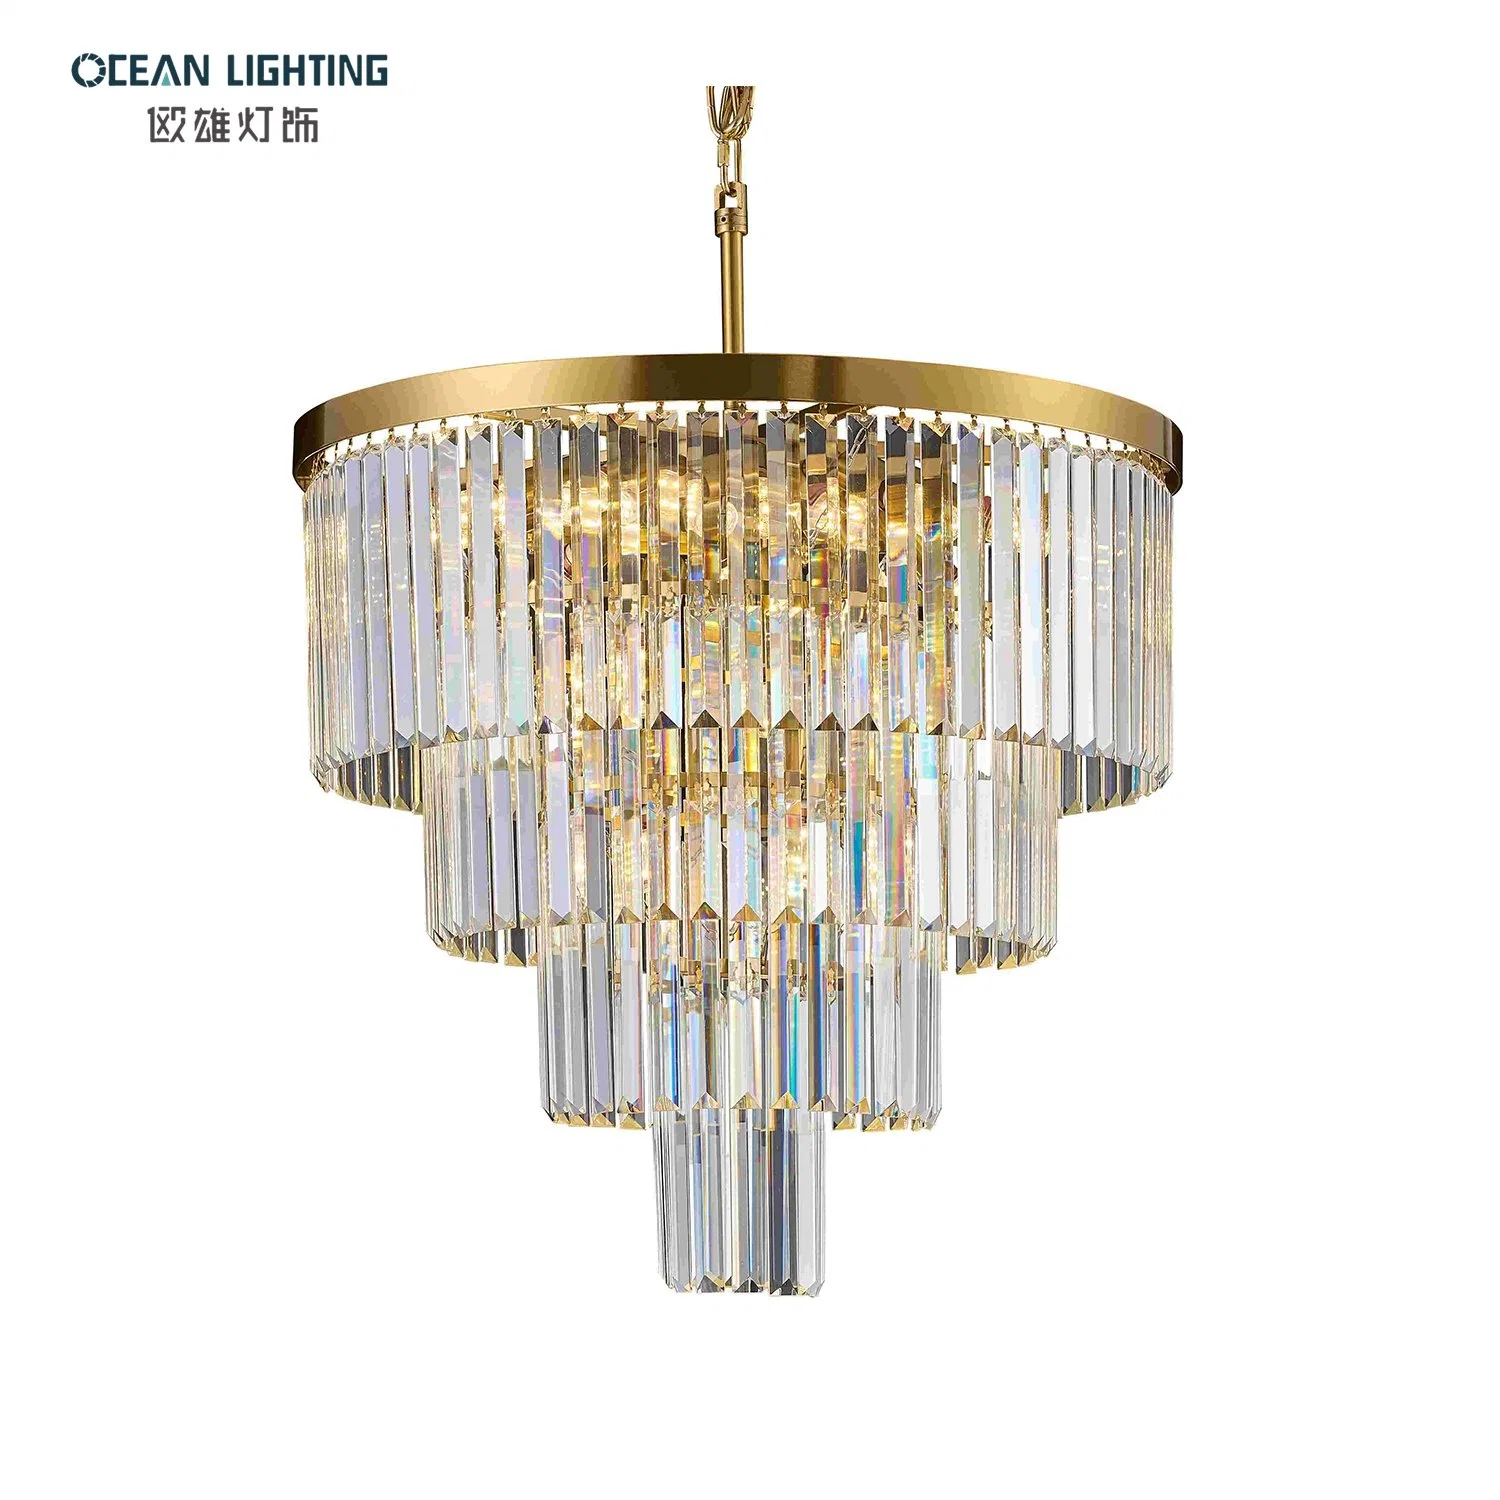 Ocean Lighting Moderninterior Lighting Hanging Chandeliers Pendant Lights Luxury Crystal